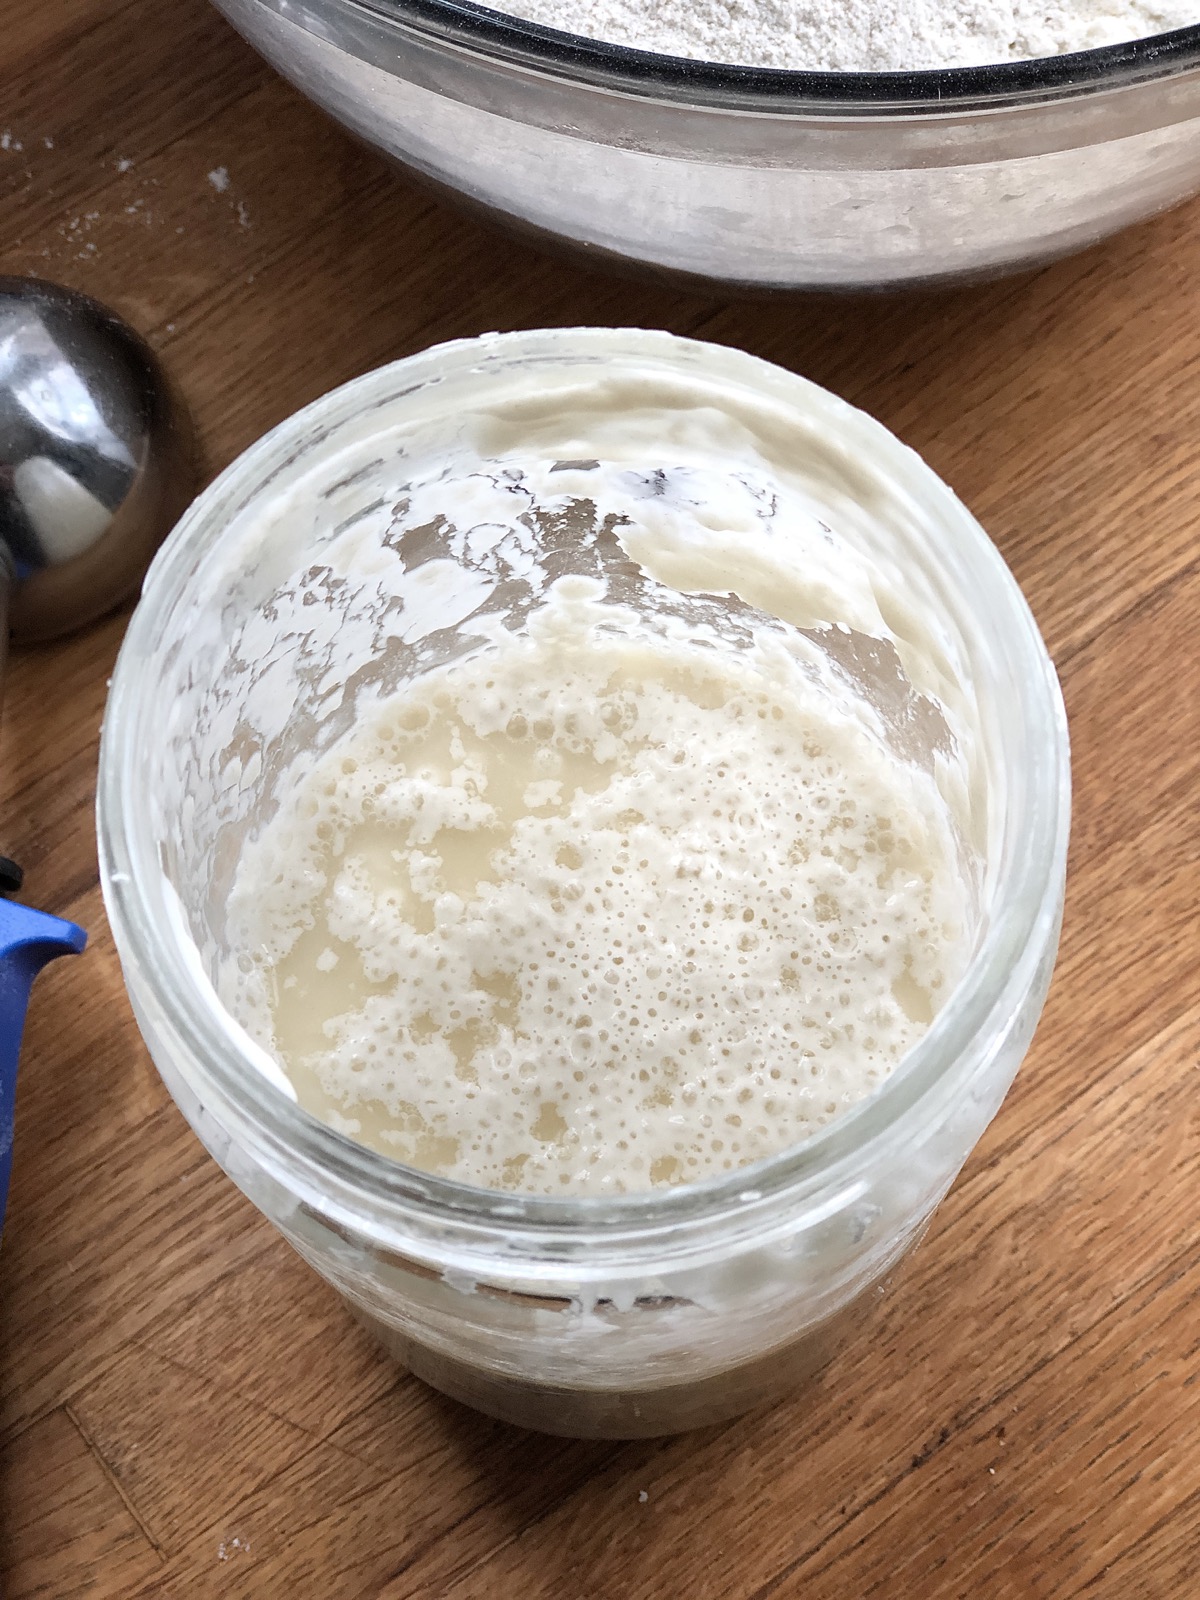 Sourdough starter in a jar, foam and liquid on top.